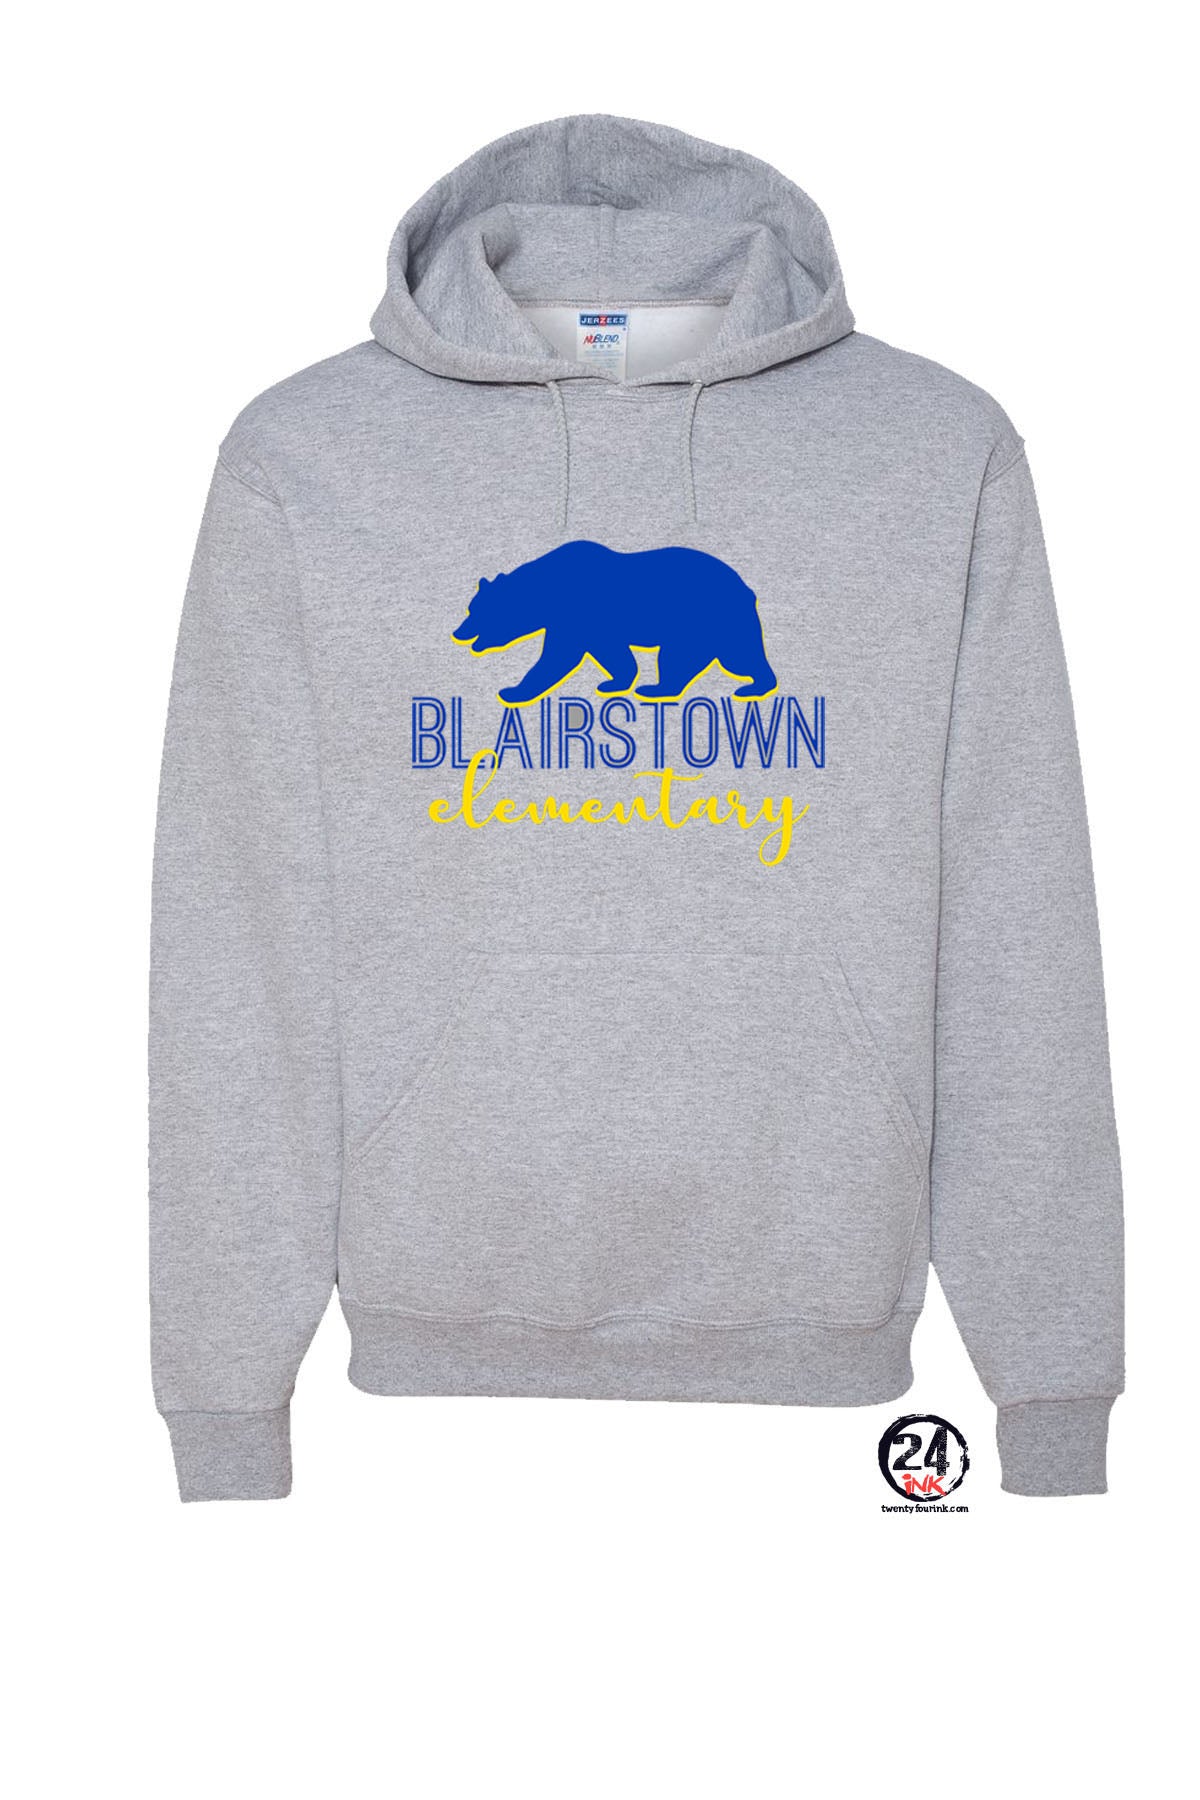 Bears design 6 Hooded Sweatshirt